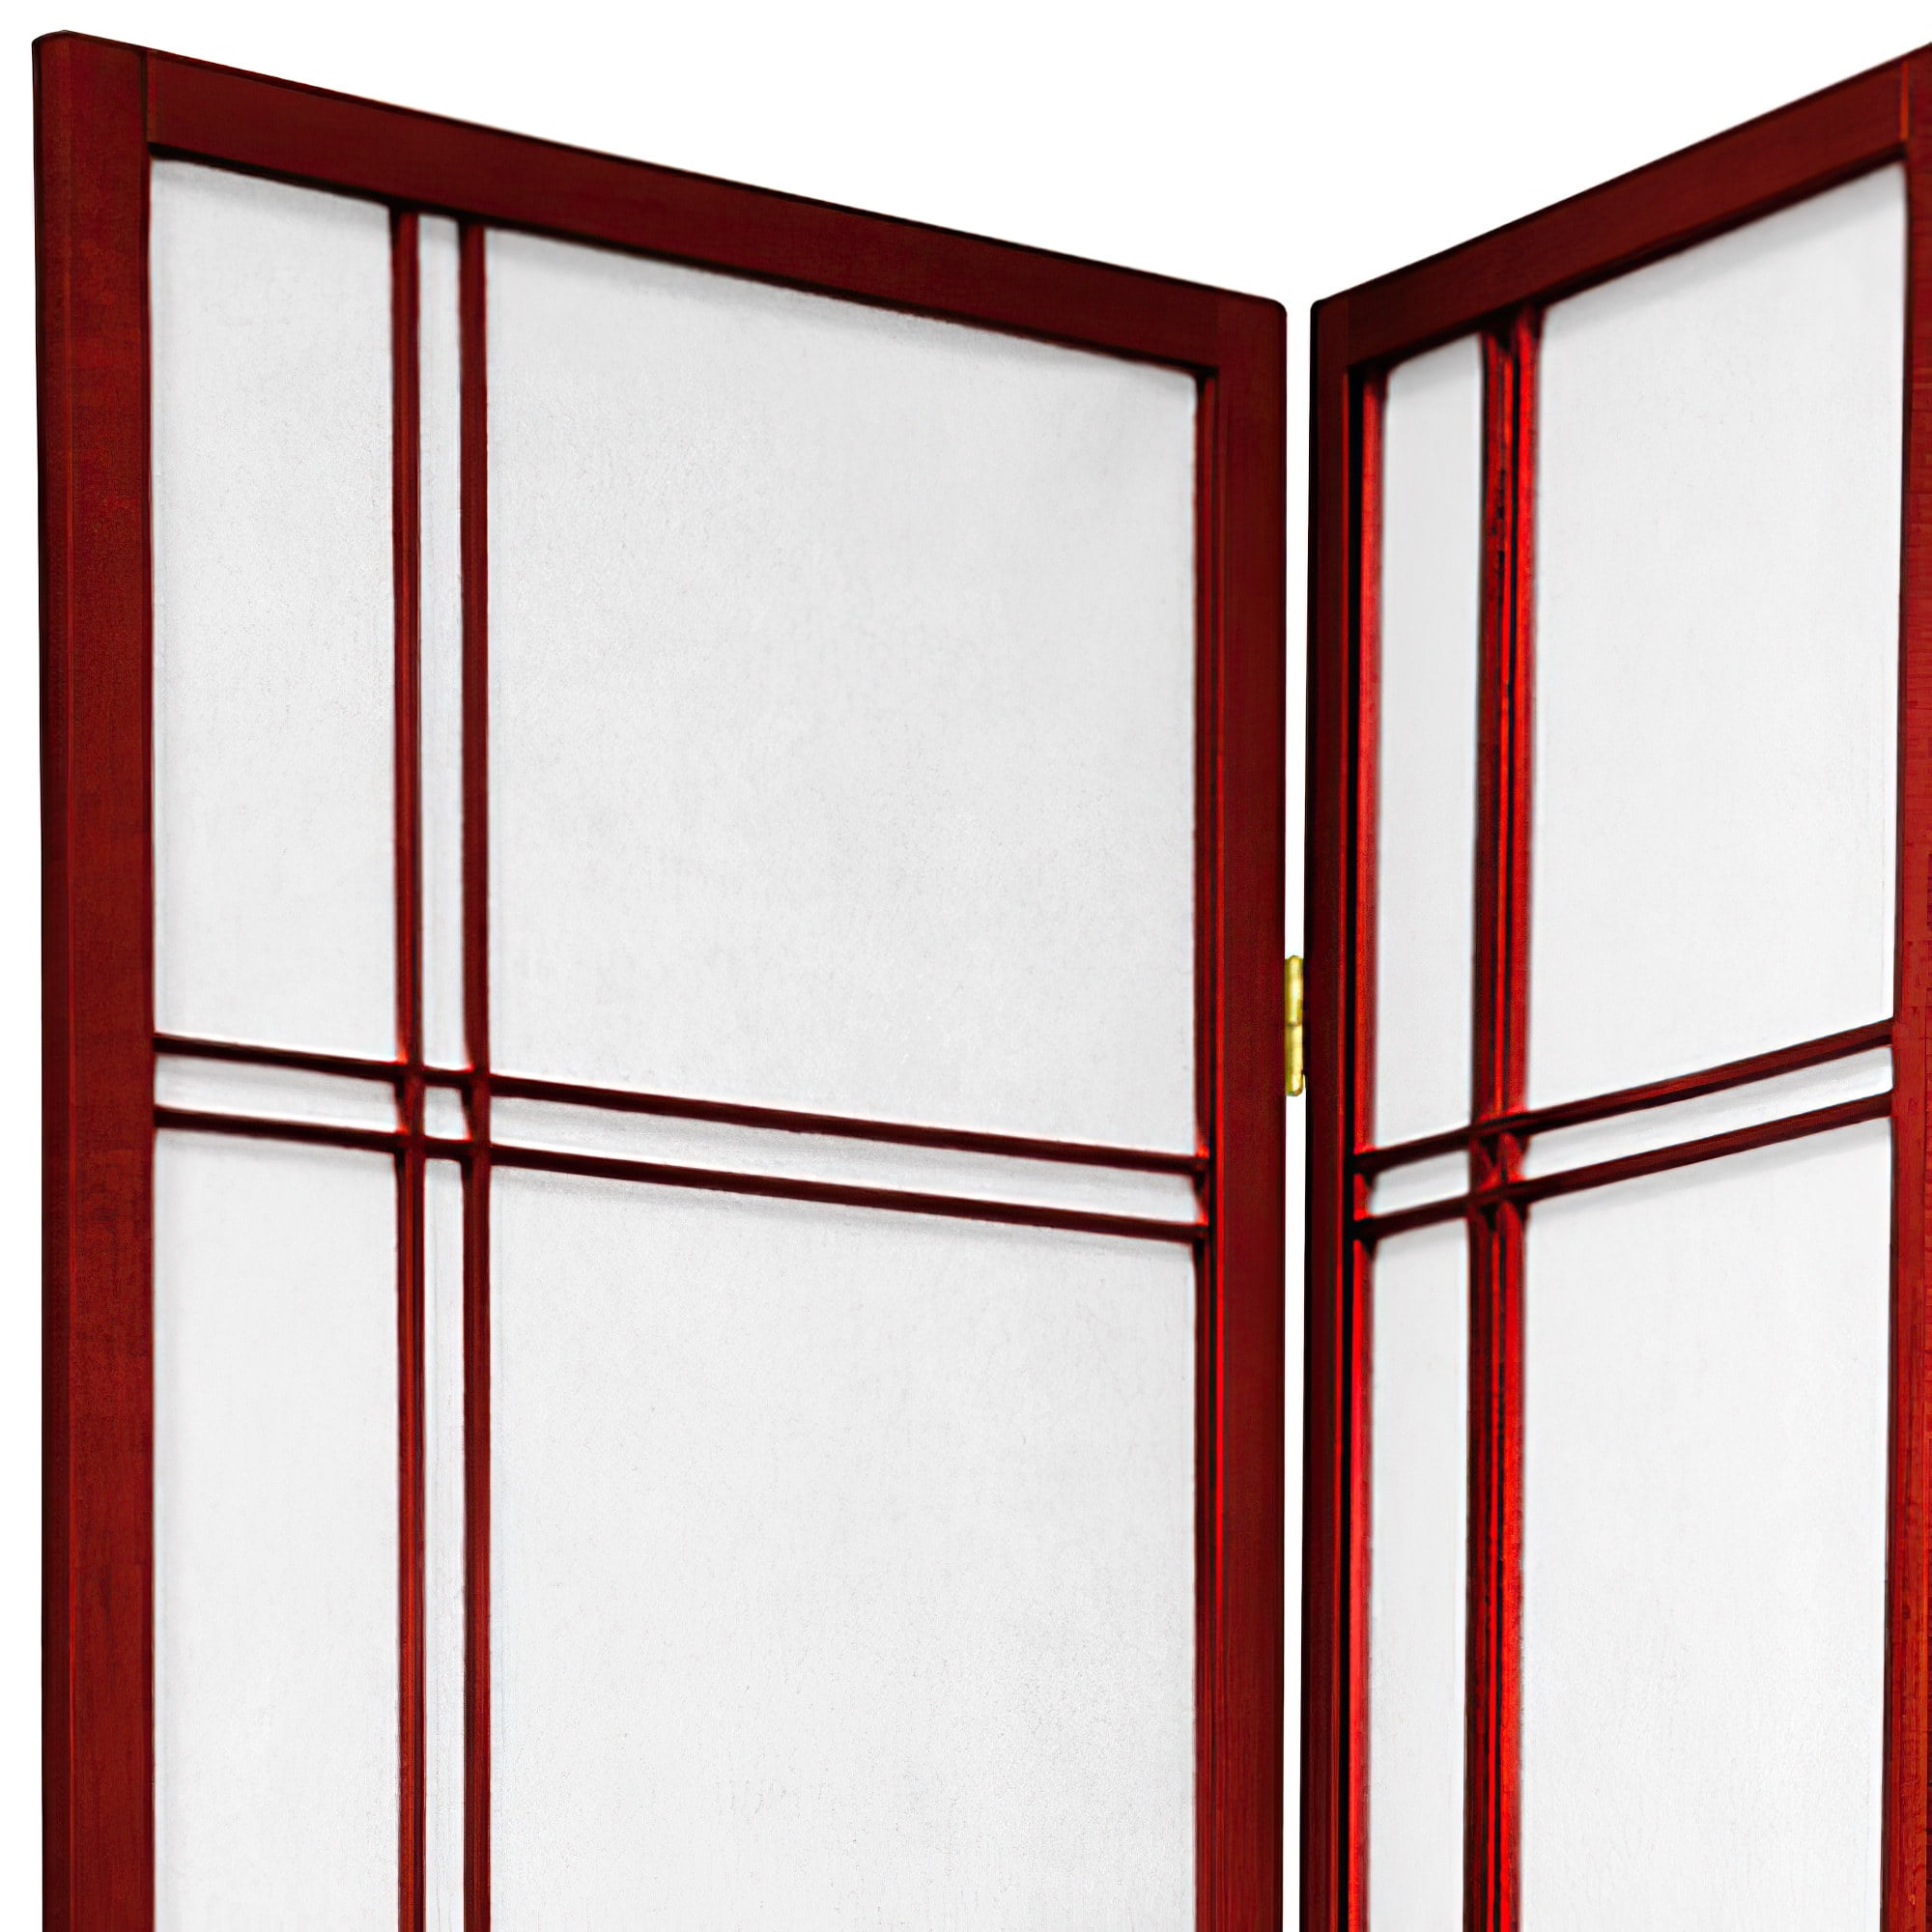 Oriental Furniture Tall Eudes Shoji Screen, Rosewood, 3 Panels